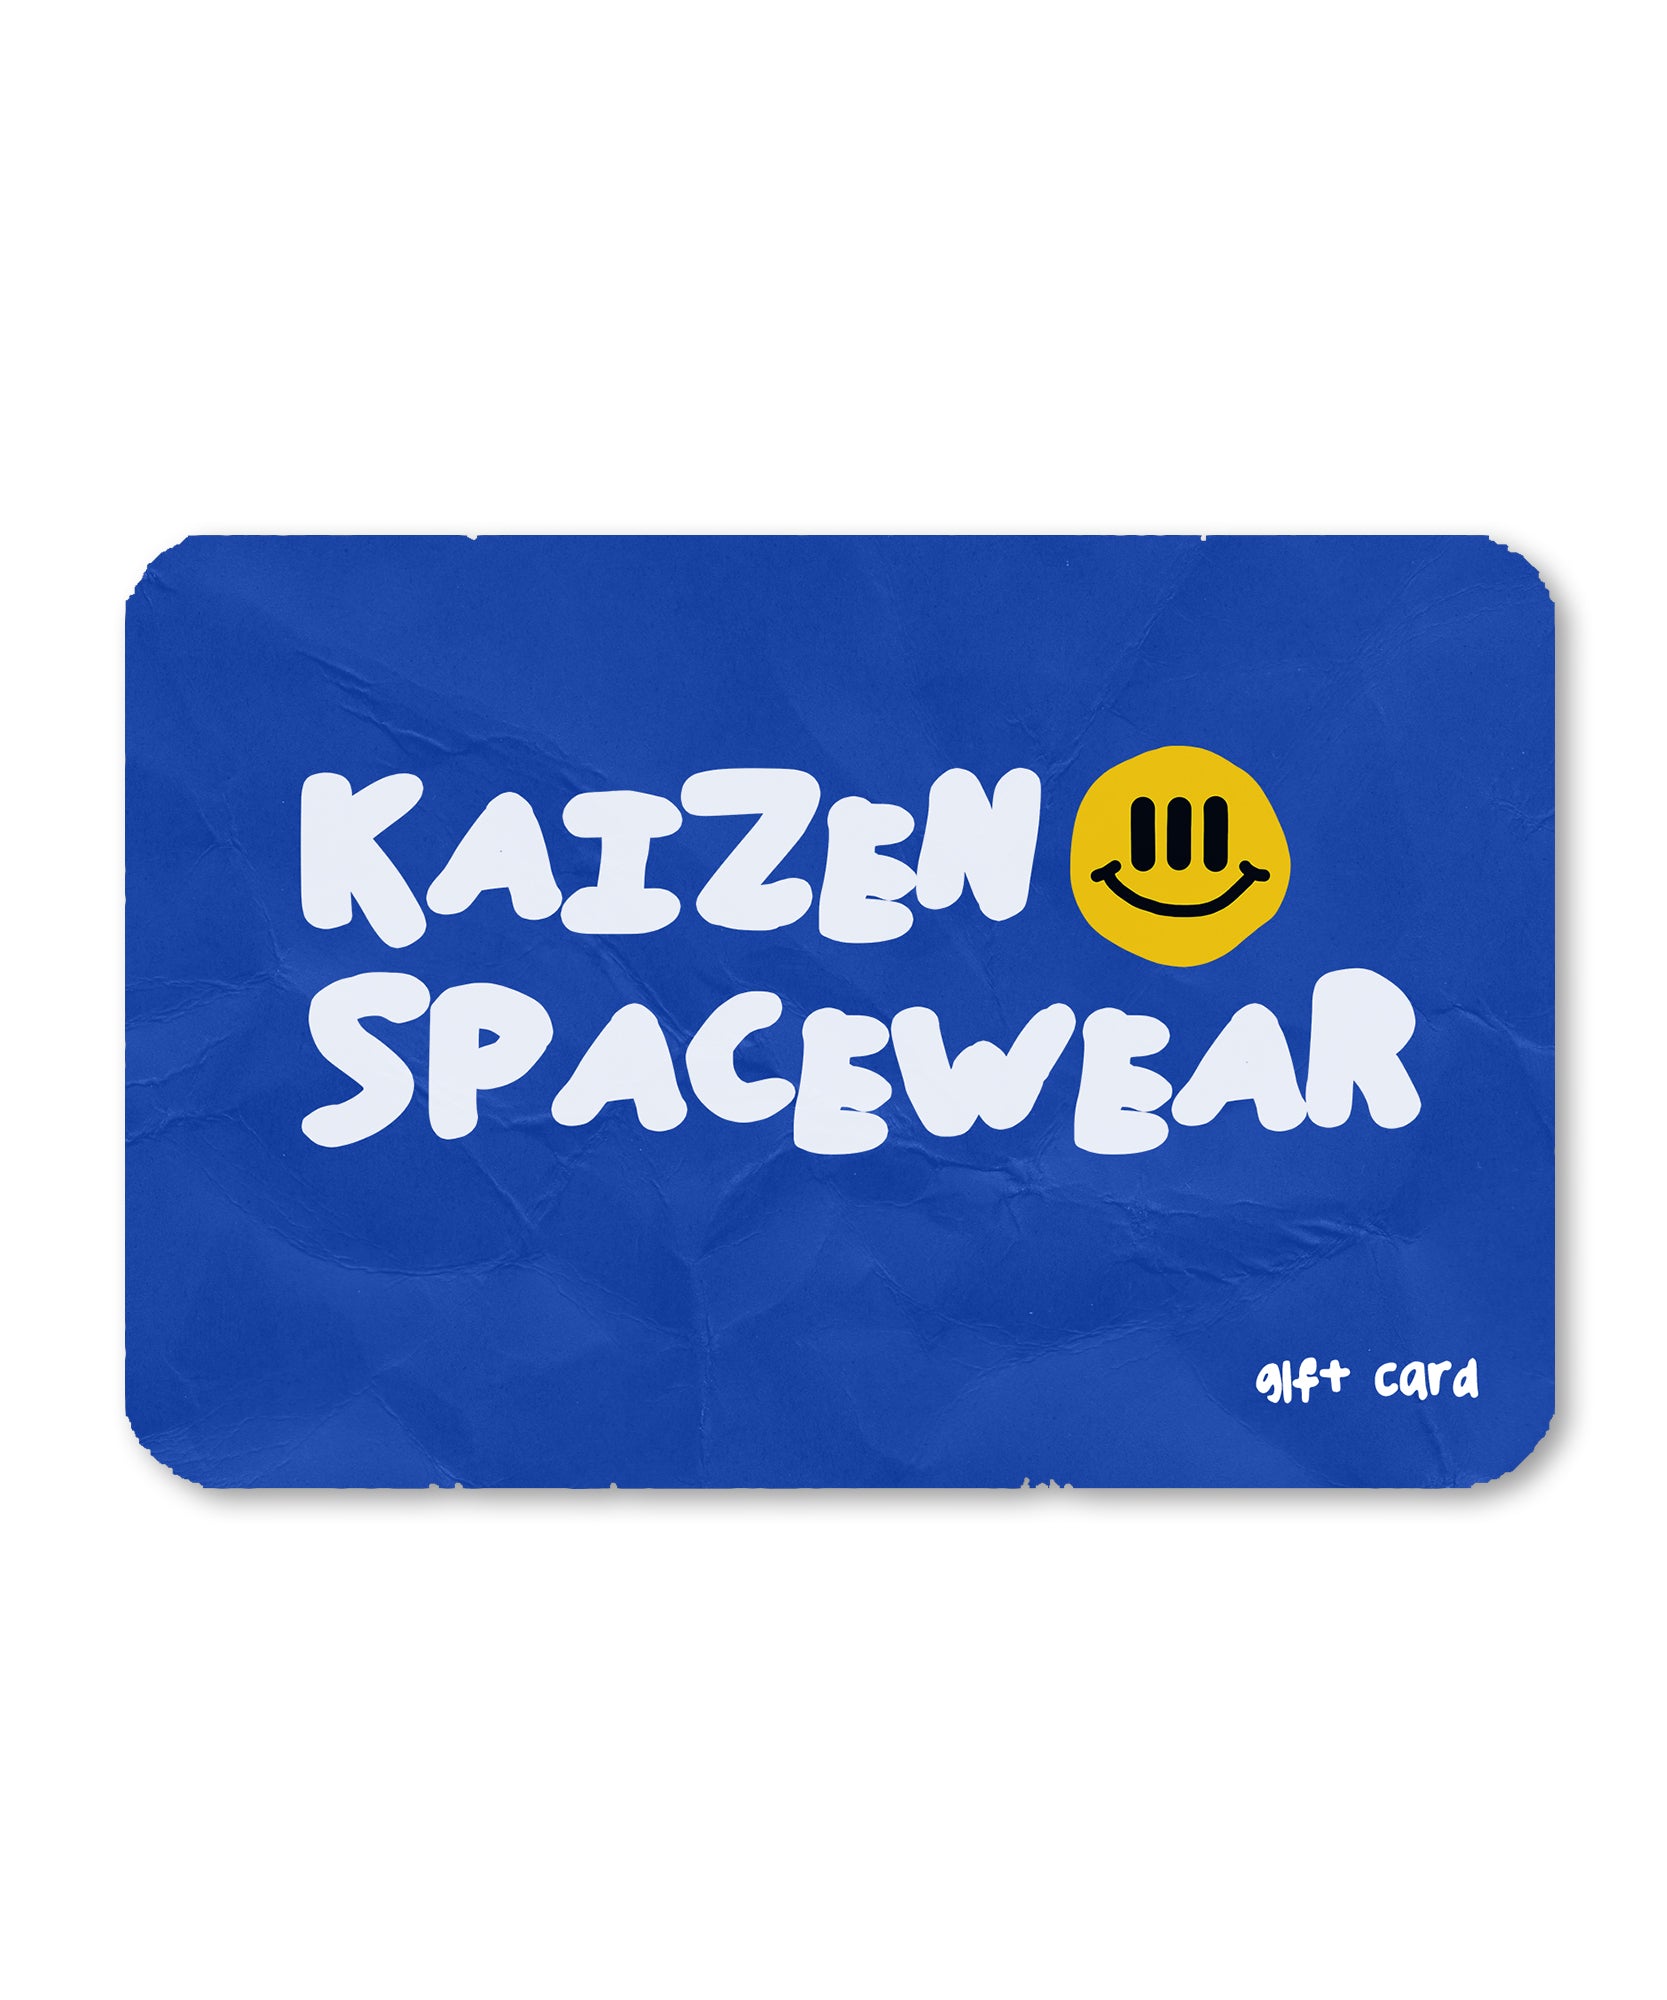 Kaizen Spacewear Gift Card